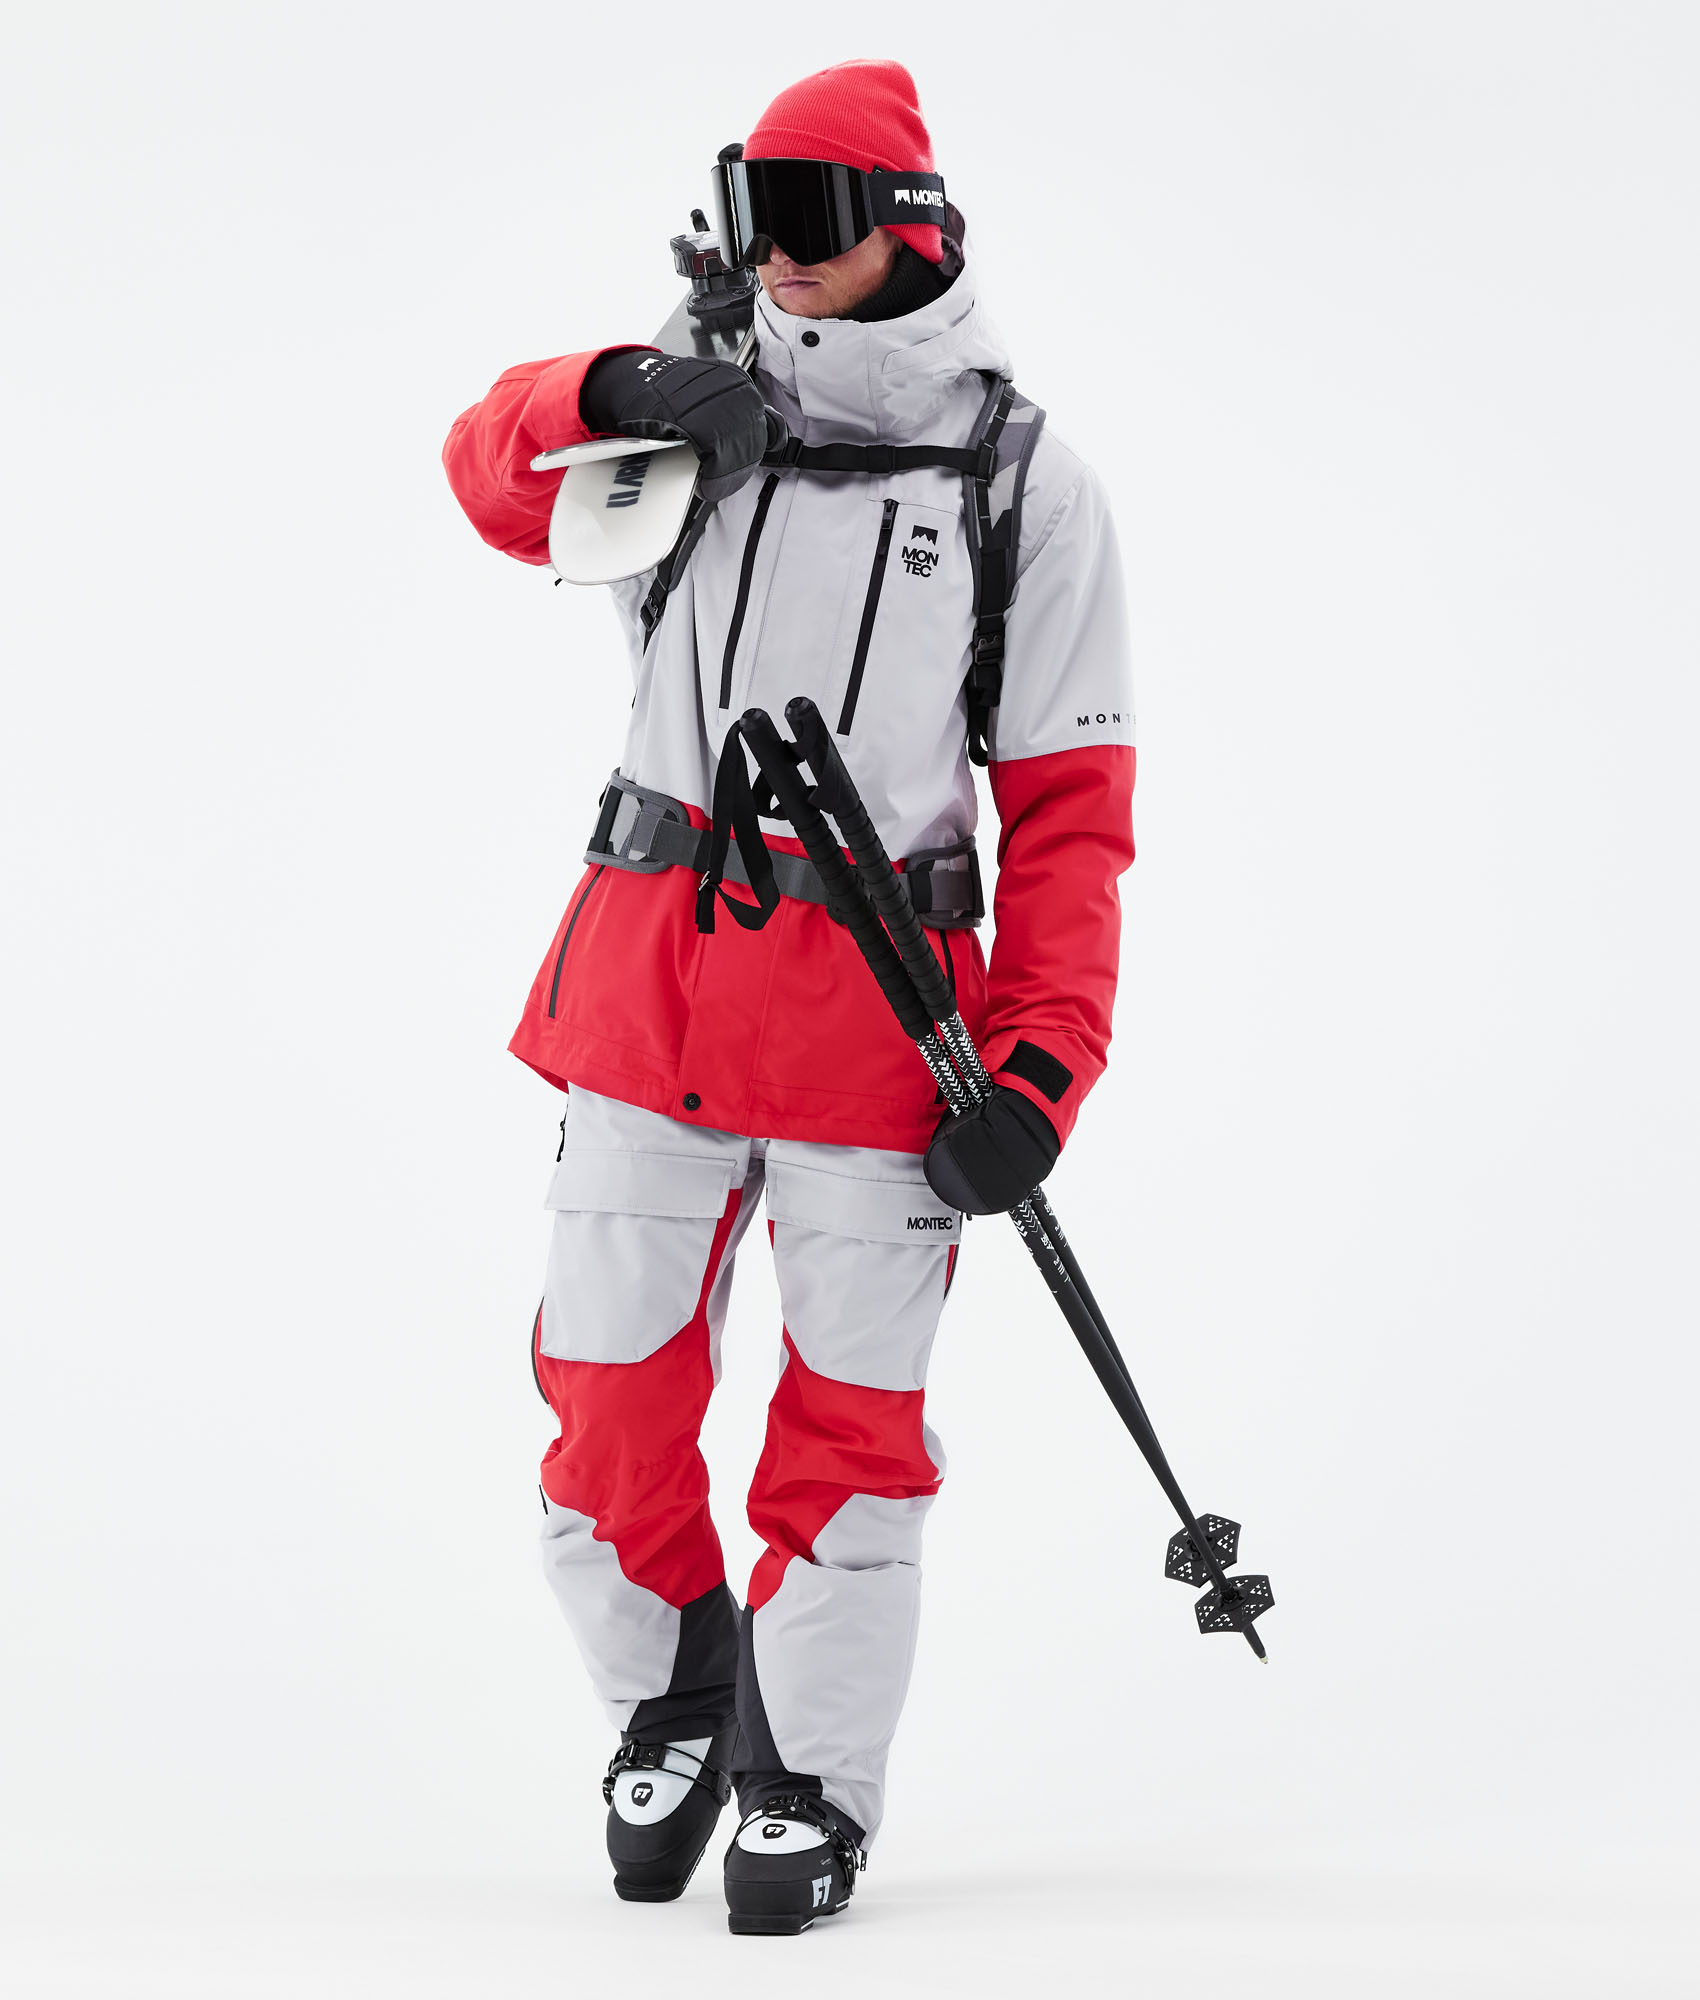 MONTEC FAWK スキー／スノボ用パンツ (Mサイズ)